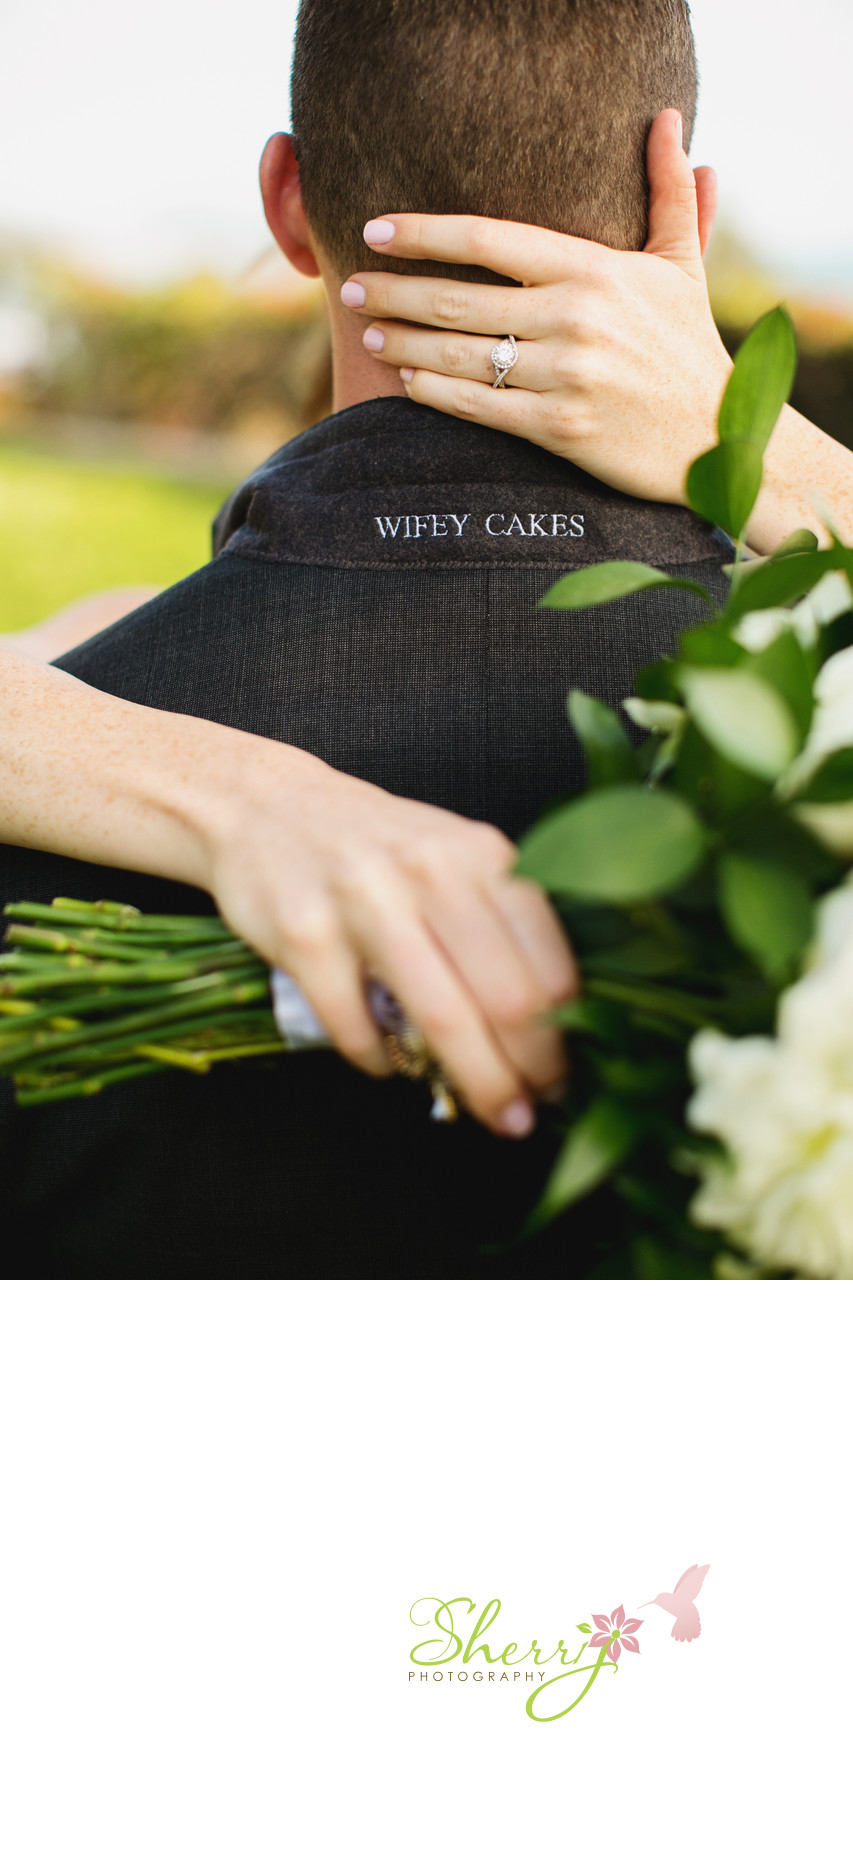 Wifey Cakes custom Bespoke suit